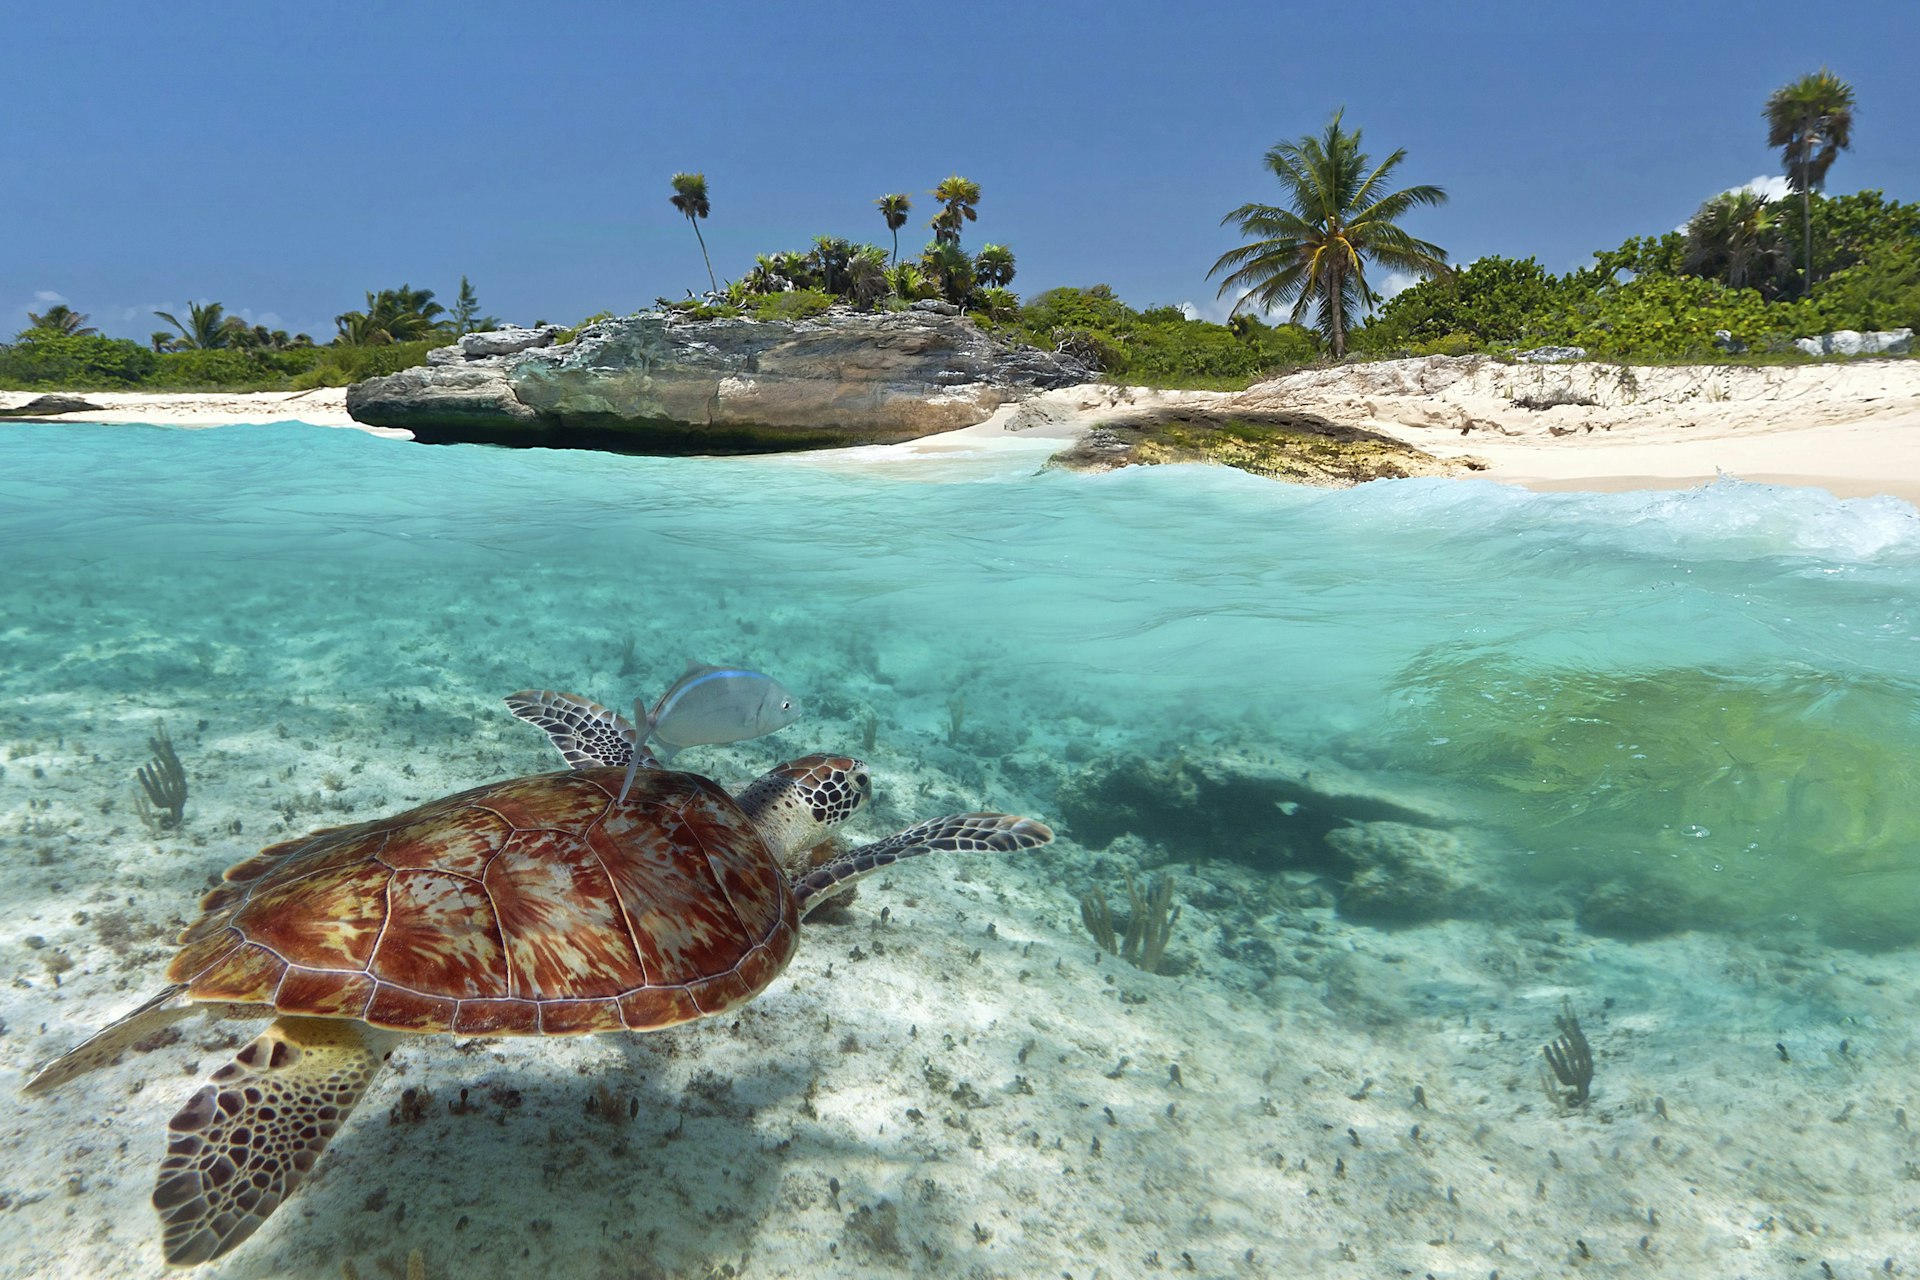 Caribbean Sea scenery with green turtle near Playa del Carmen, Mexico